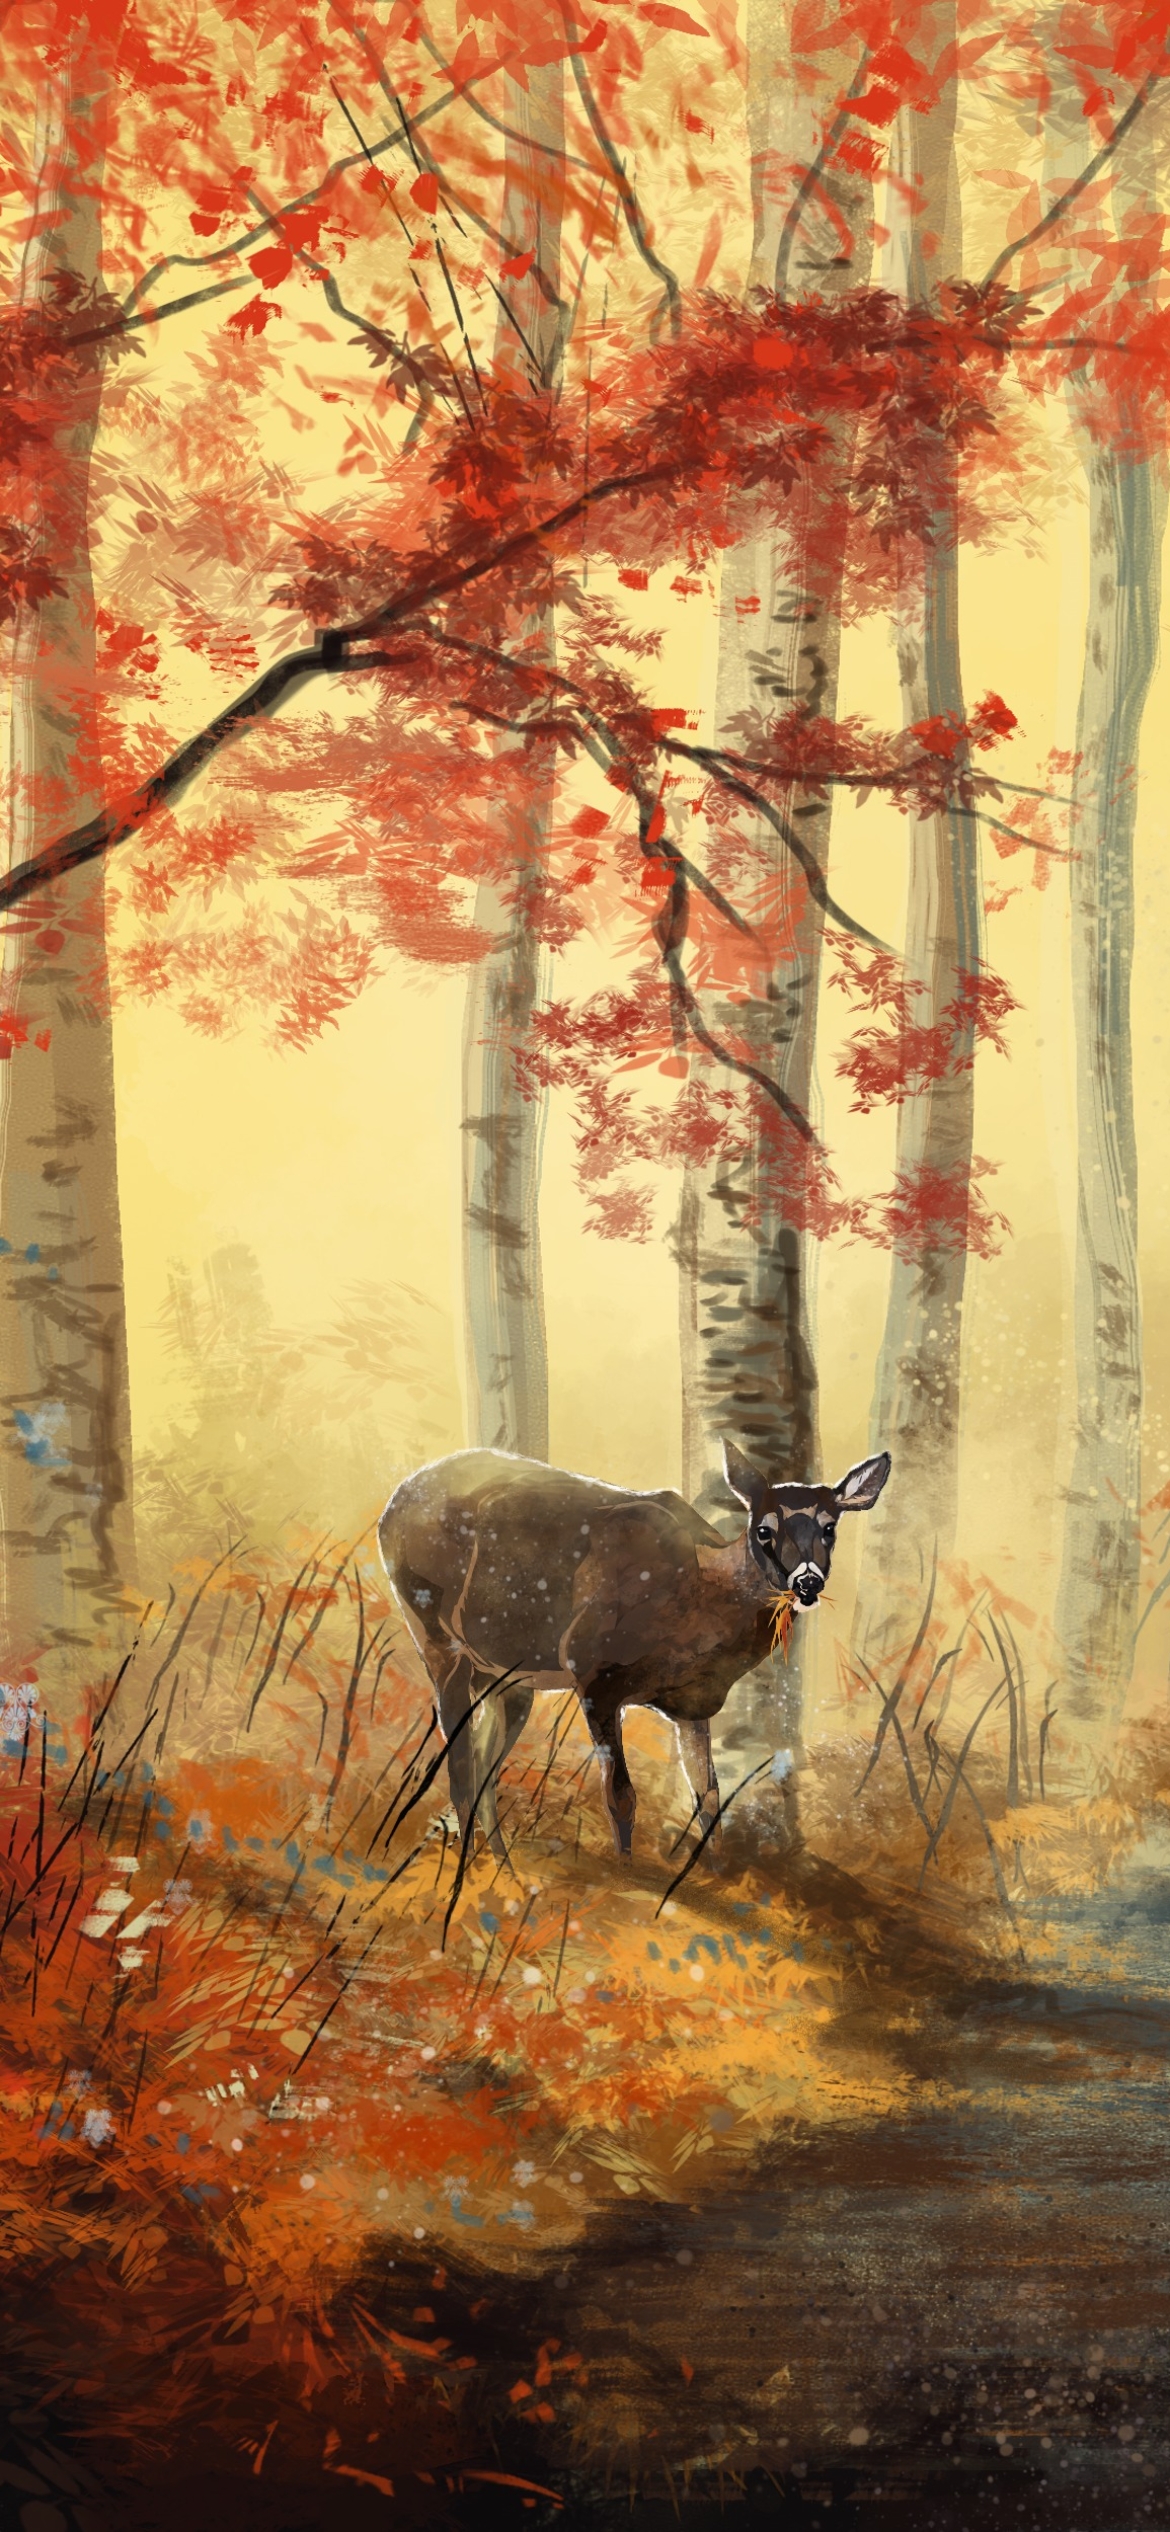 Deer Trail by Roiuky